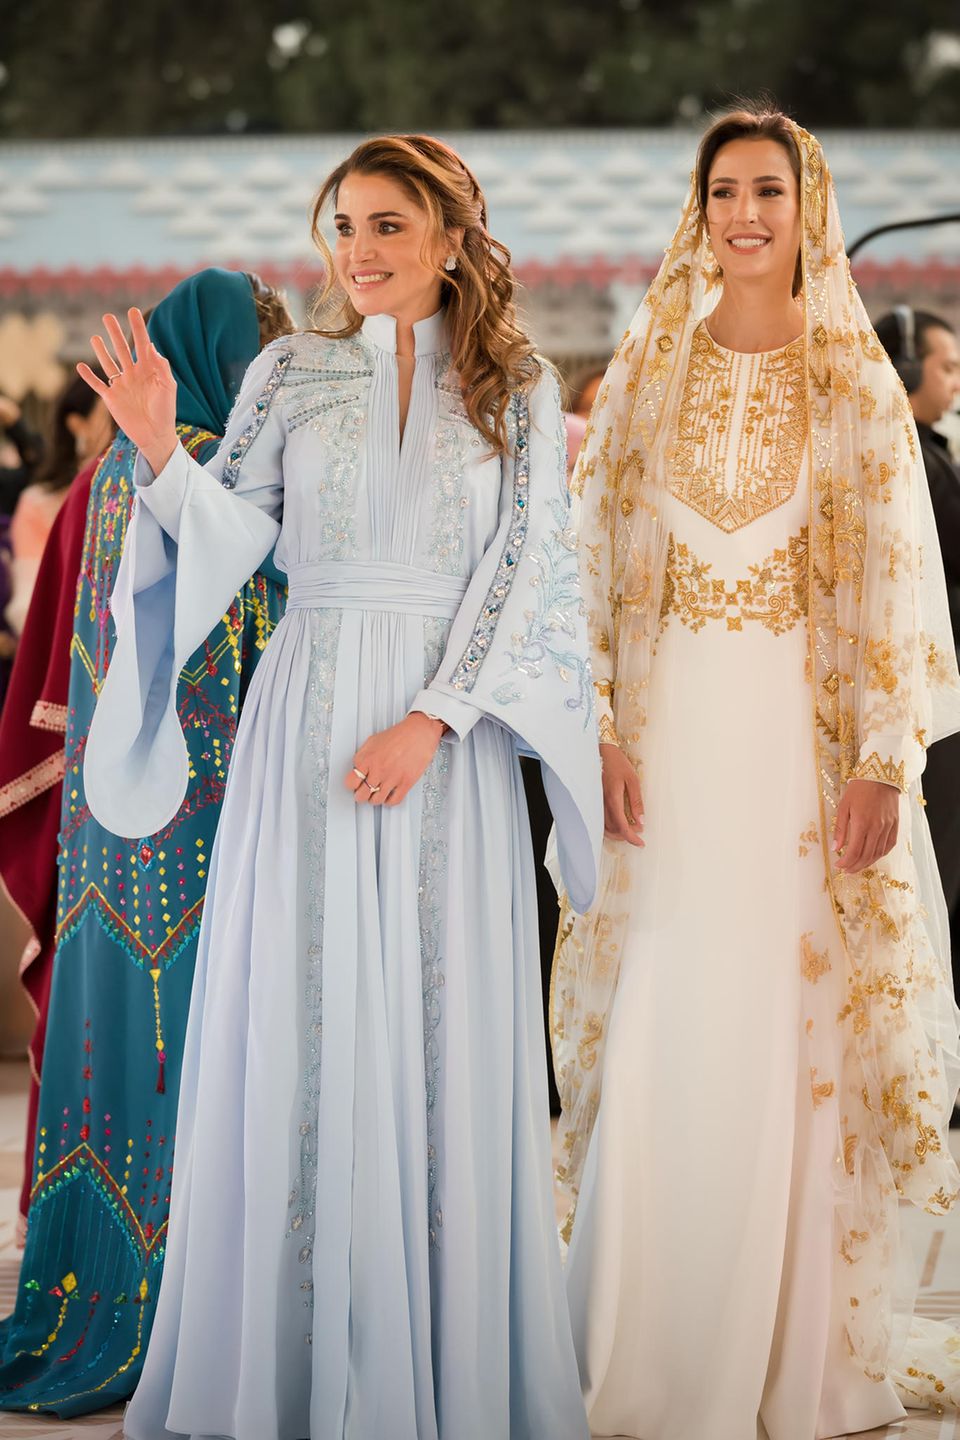 Queen Rania and Rajwa Al-Saif